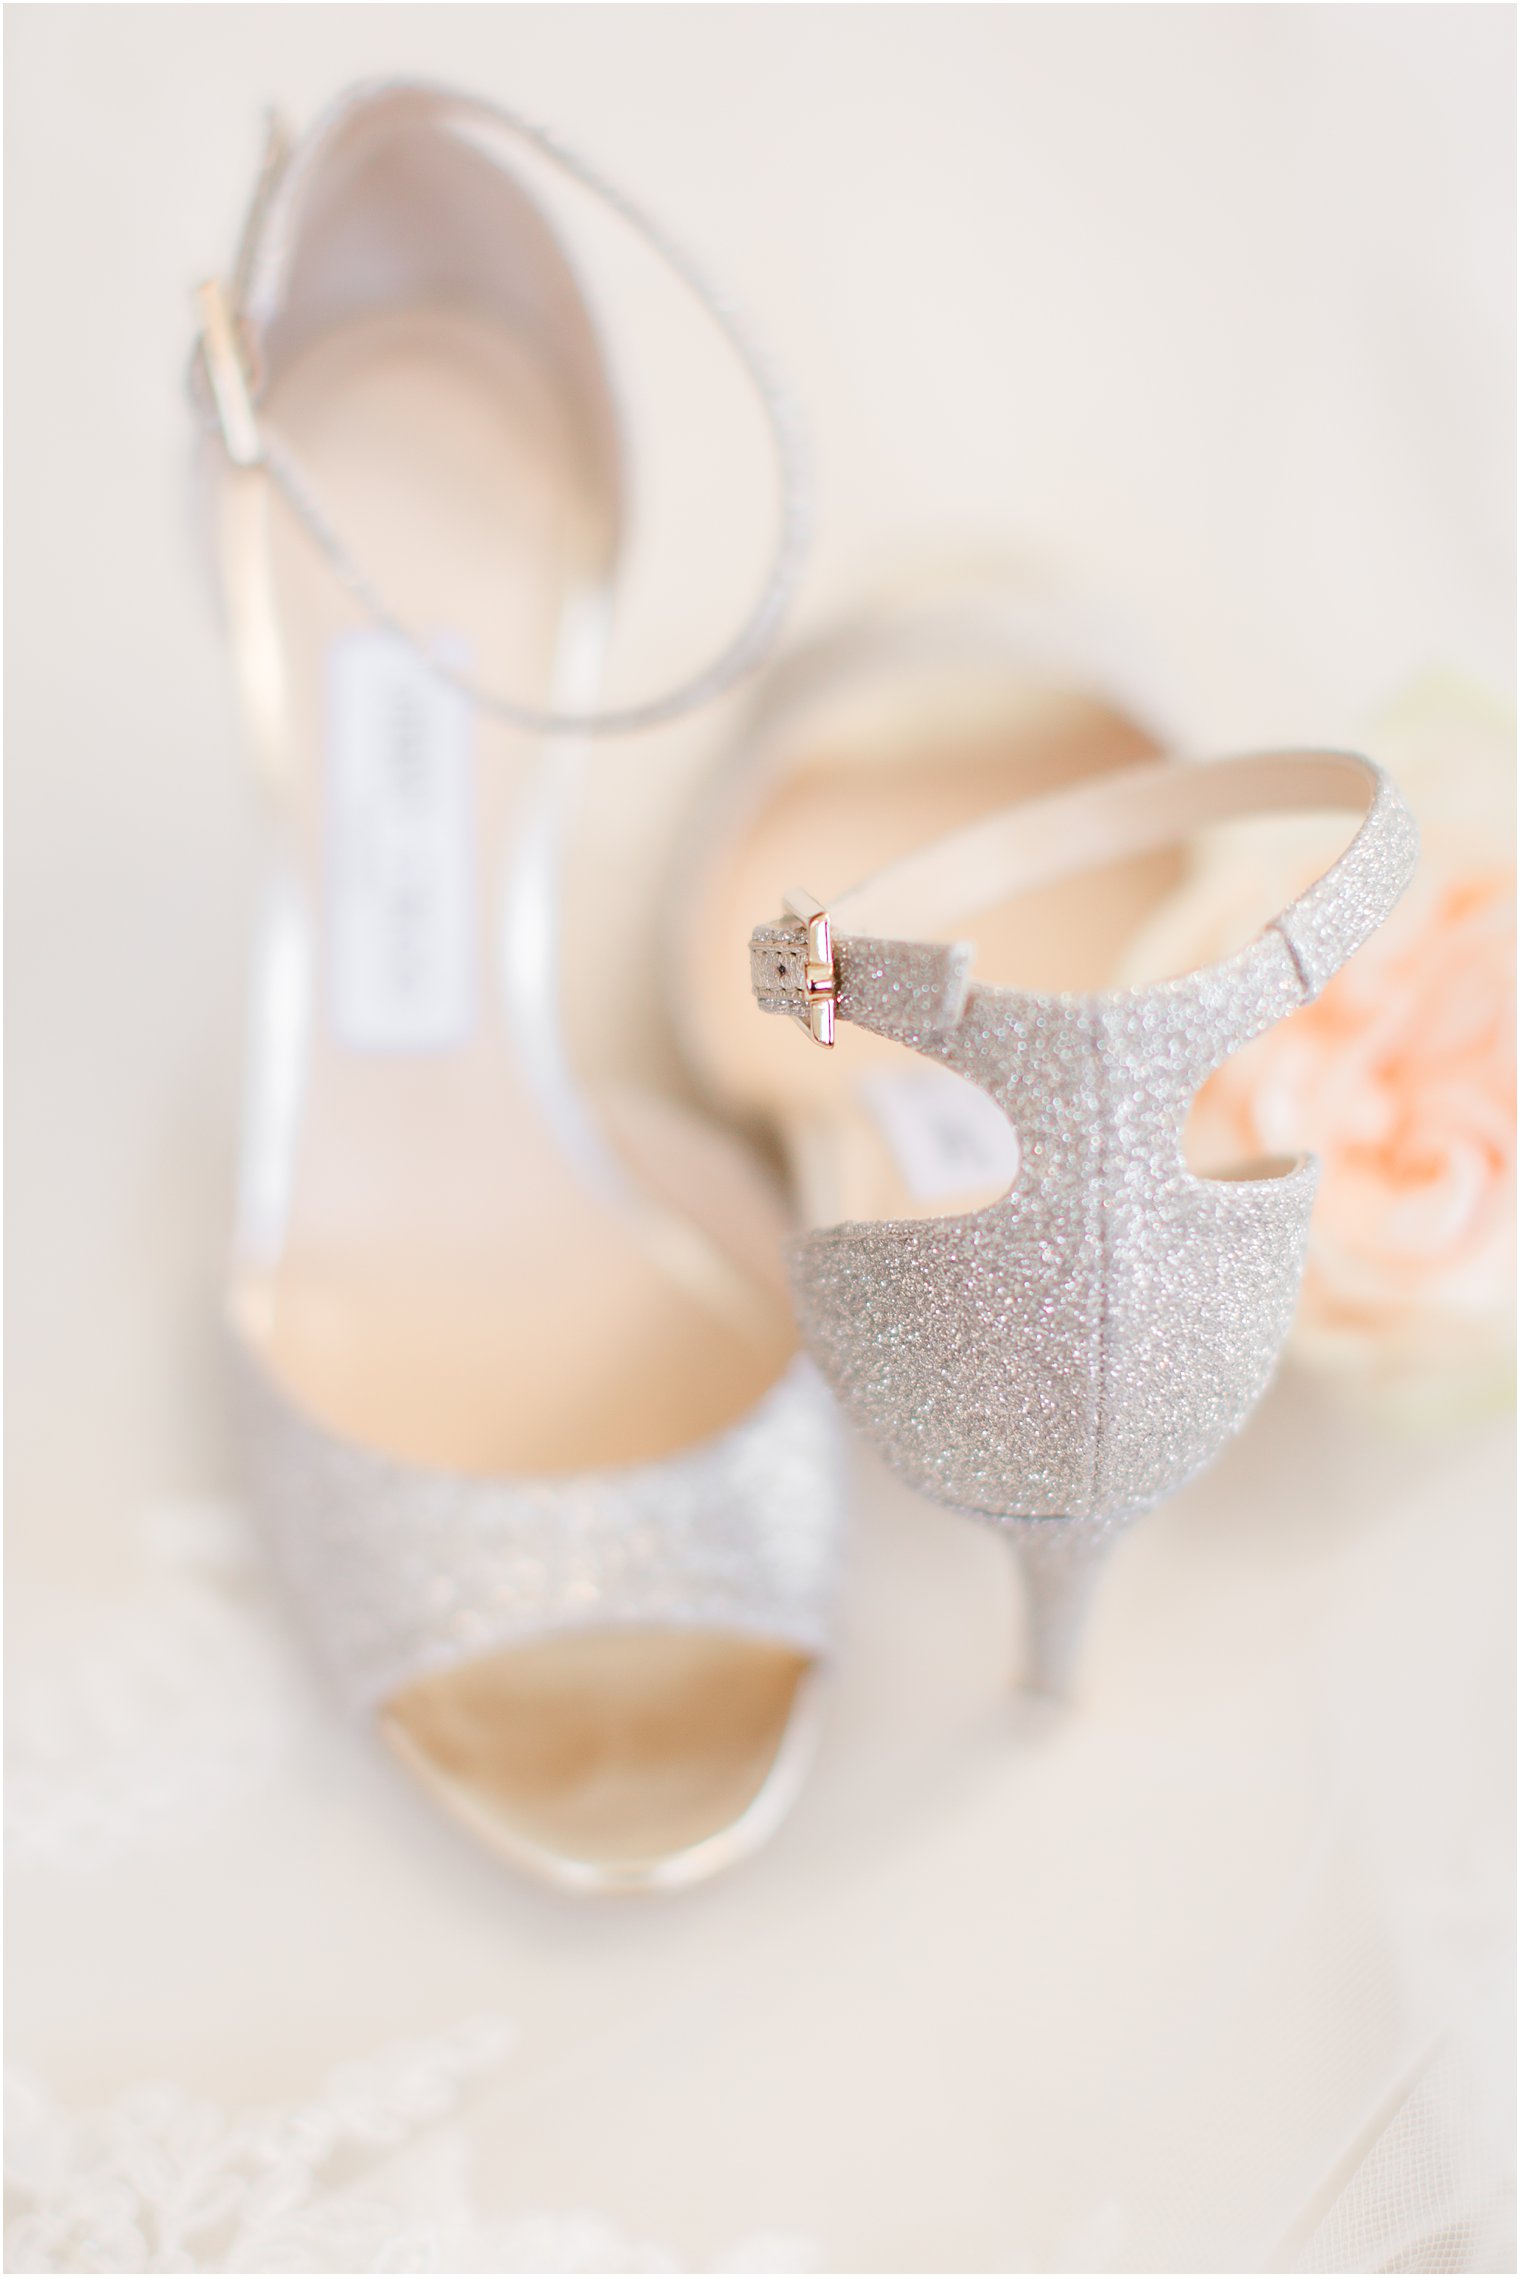 Jimmy Choo bridal shoe inspiration